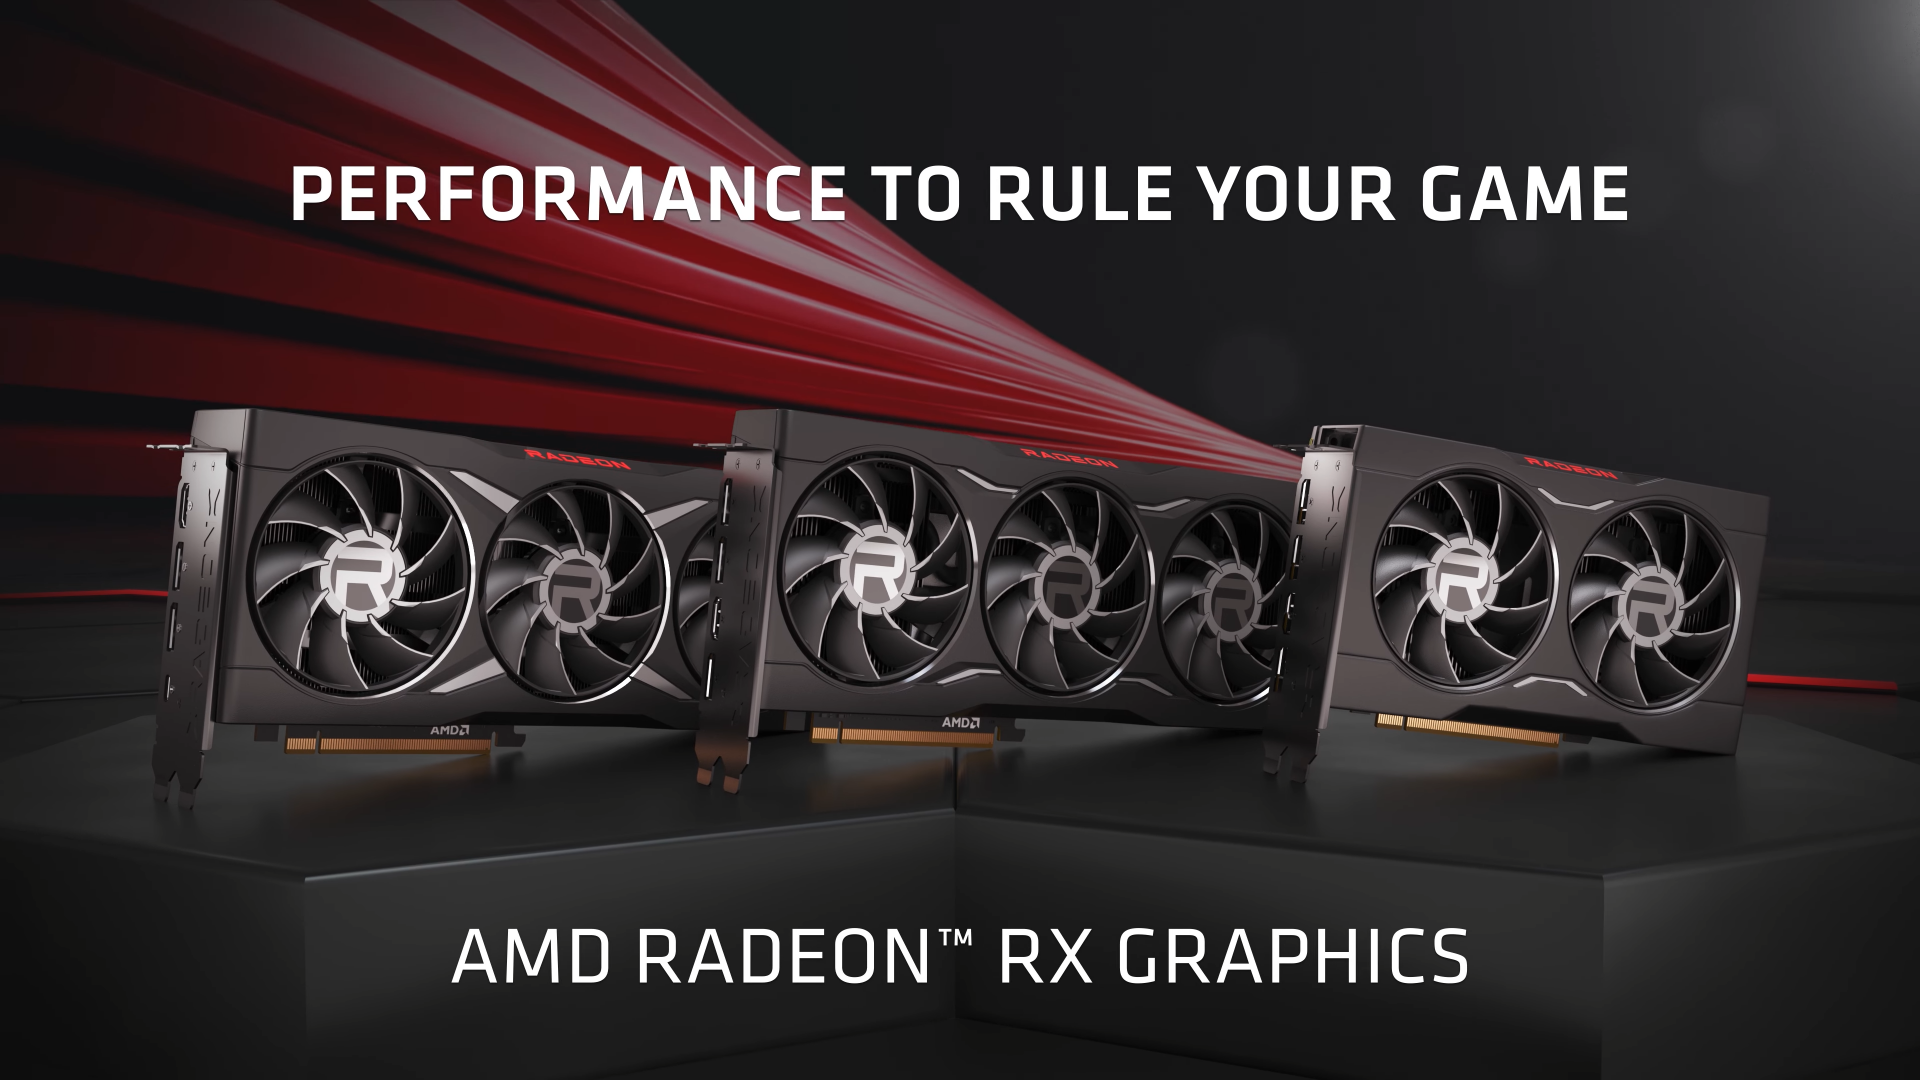 AMD หั่นราคาการ์ดจอ Radeon RX 6000 ลงทุกรุ่น เพื่อต้อนรับการมาของ RDNA 3